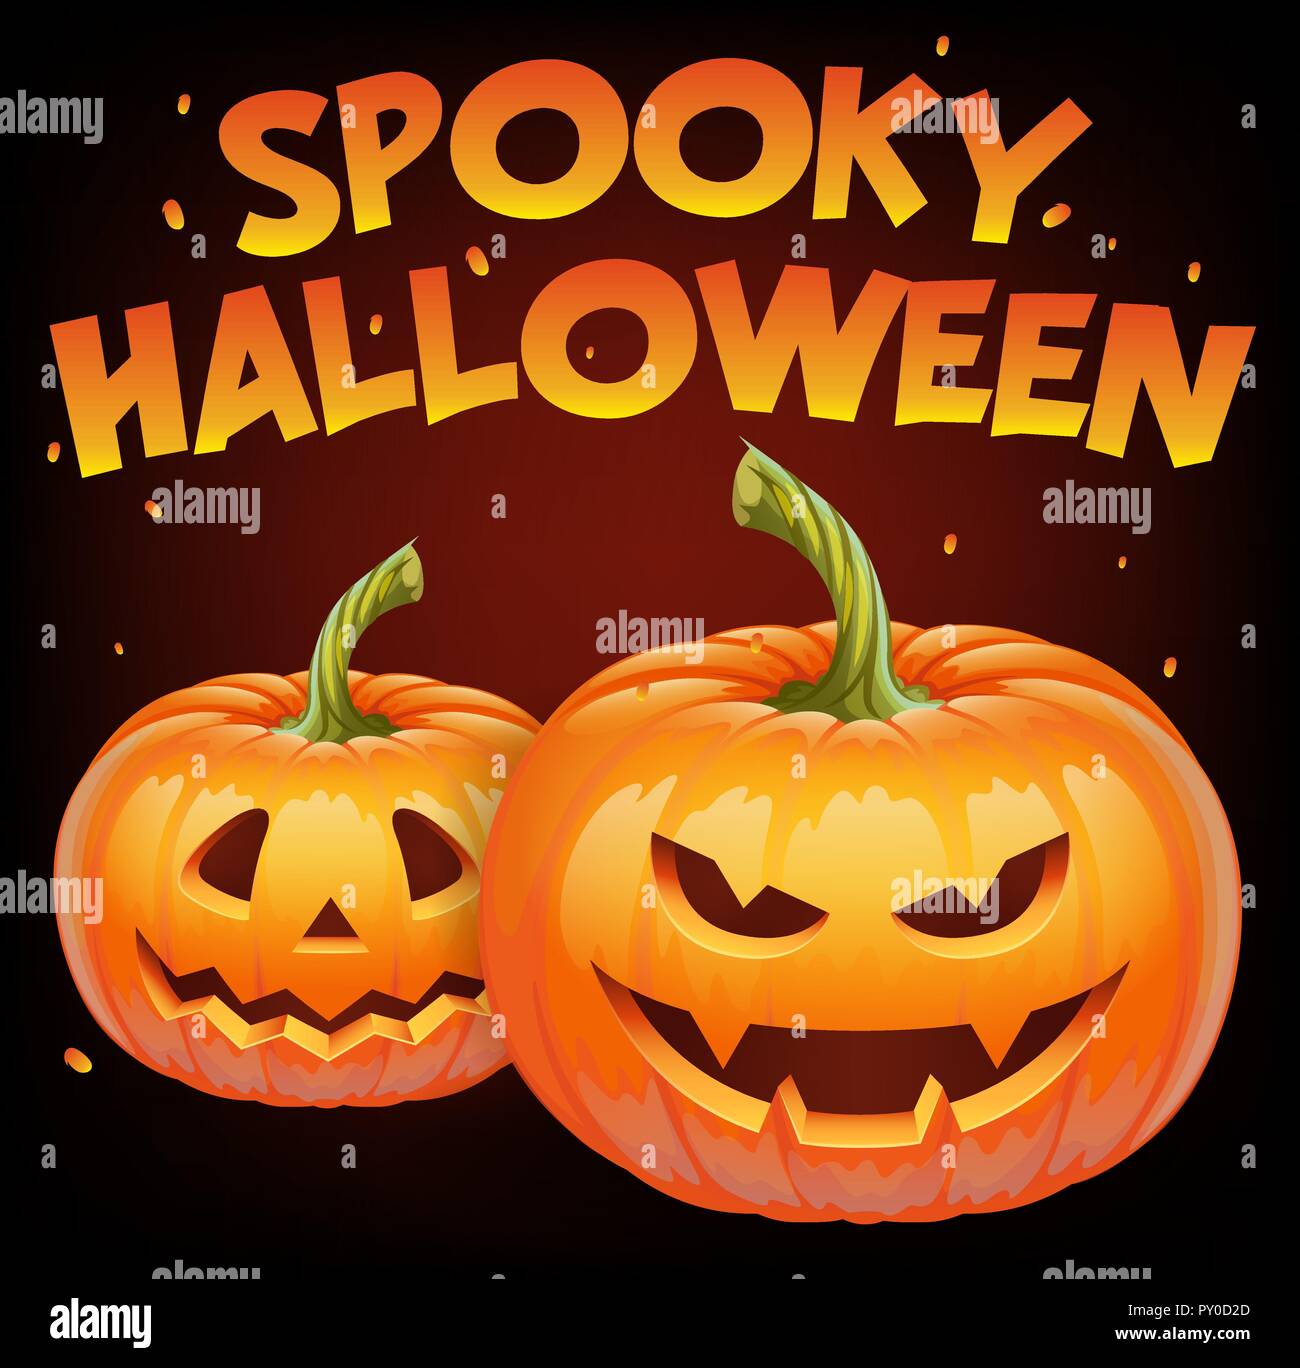 Spooky halloween banner with halloween pumpkin face - Evil smile Jack o ...